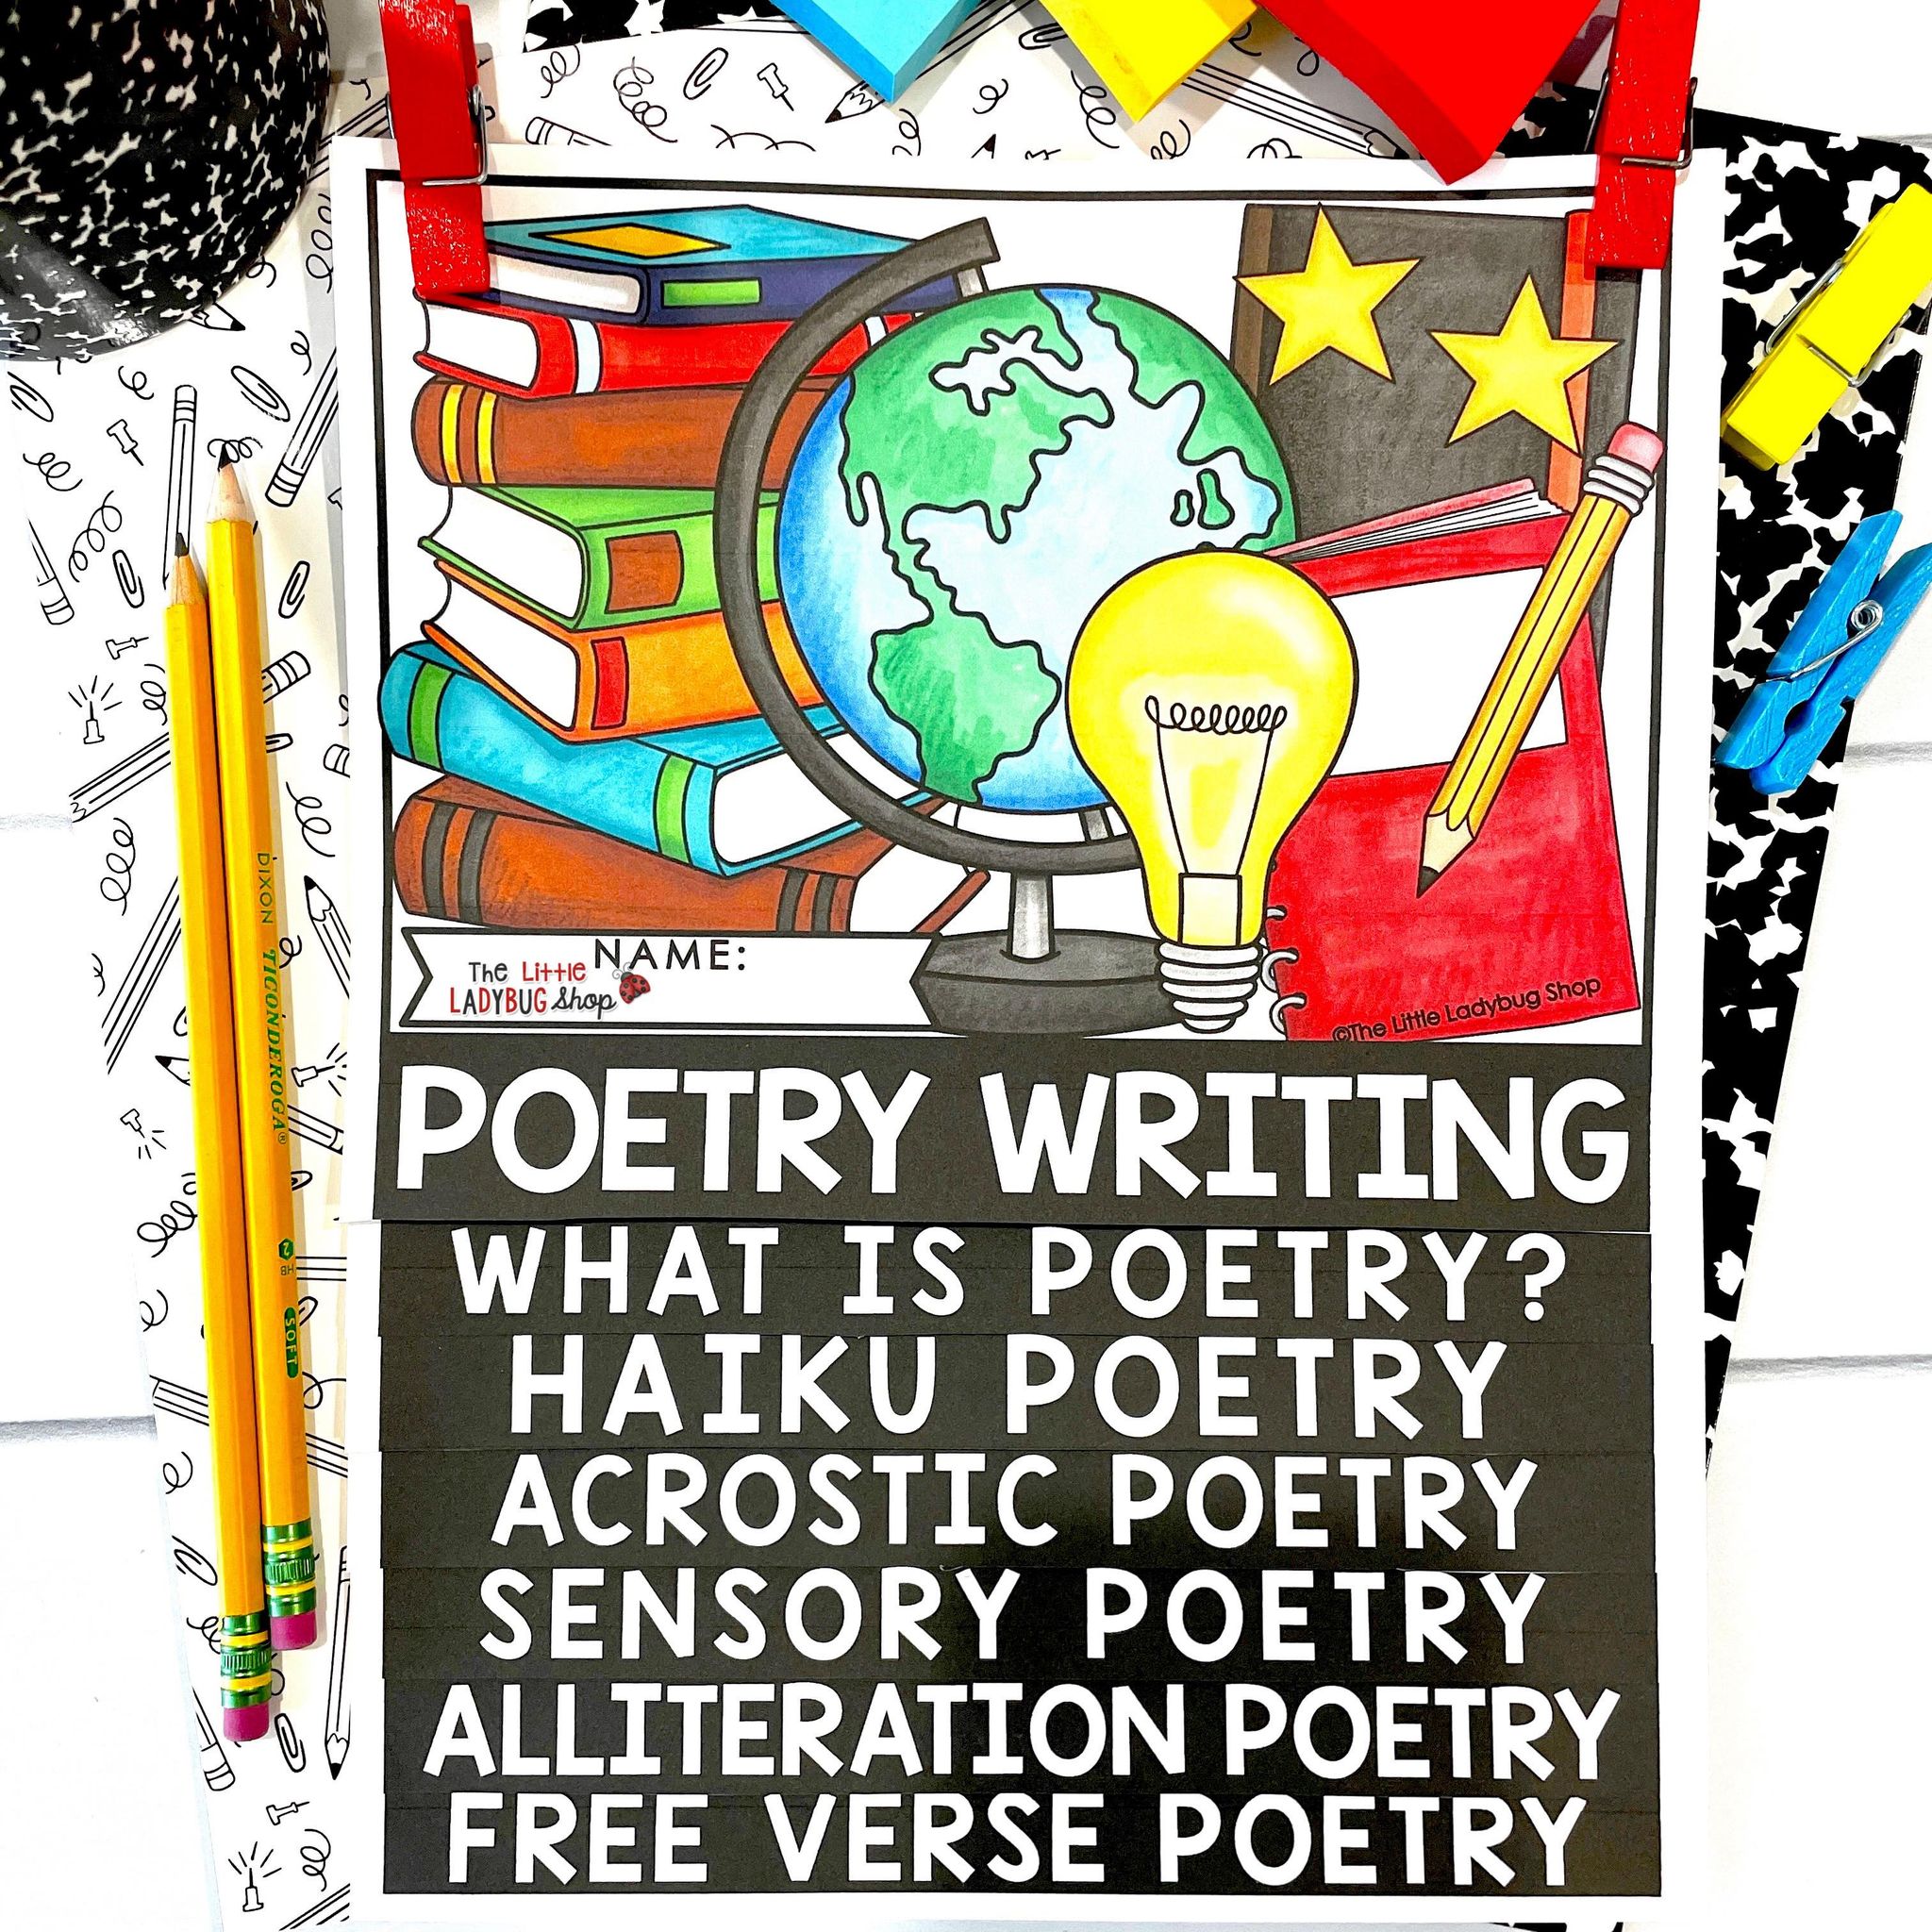 Poetry Writing for Upper Elementary